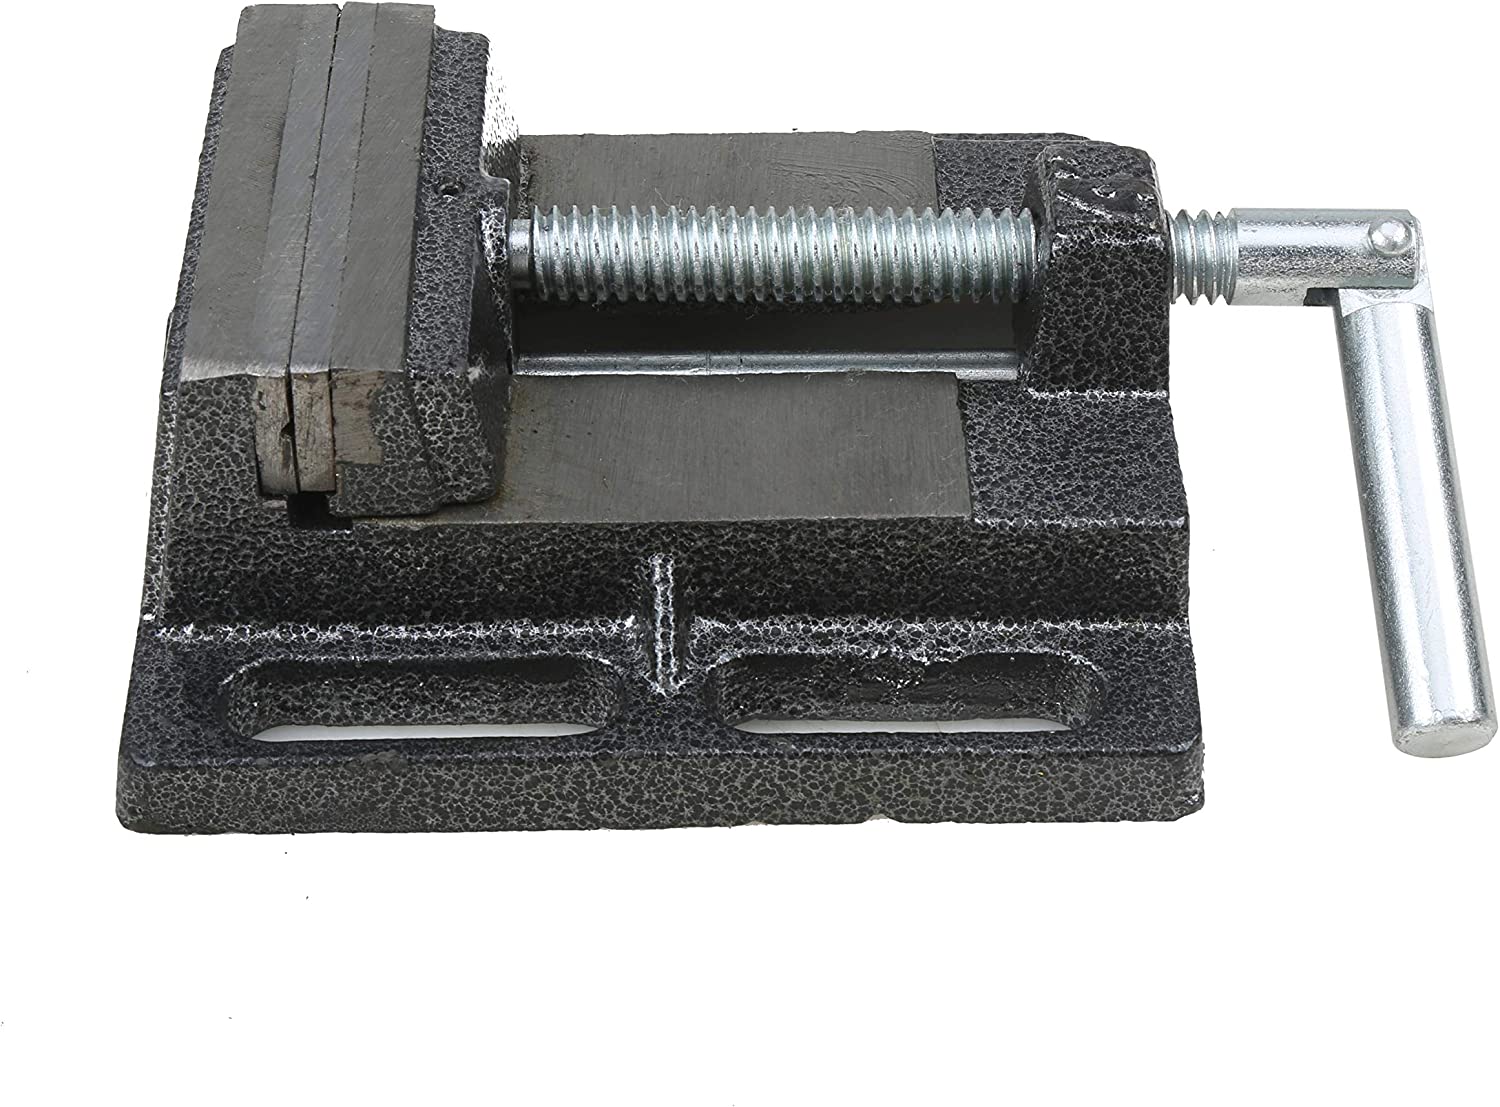 Olympia Tools 38-714 4" Flat Drill Press Vise, Black - image 3 of 8